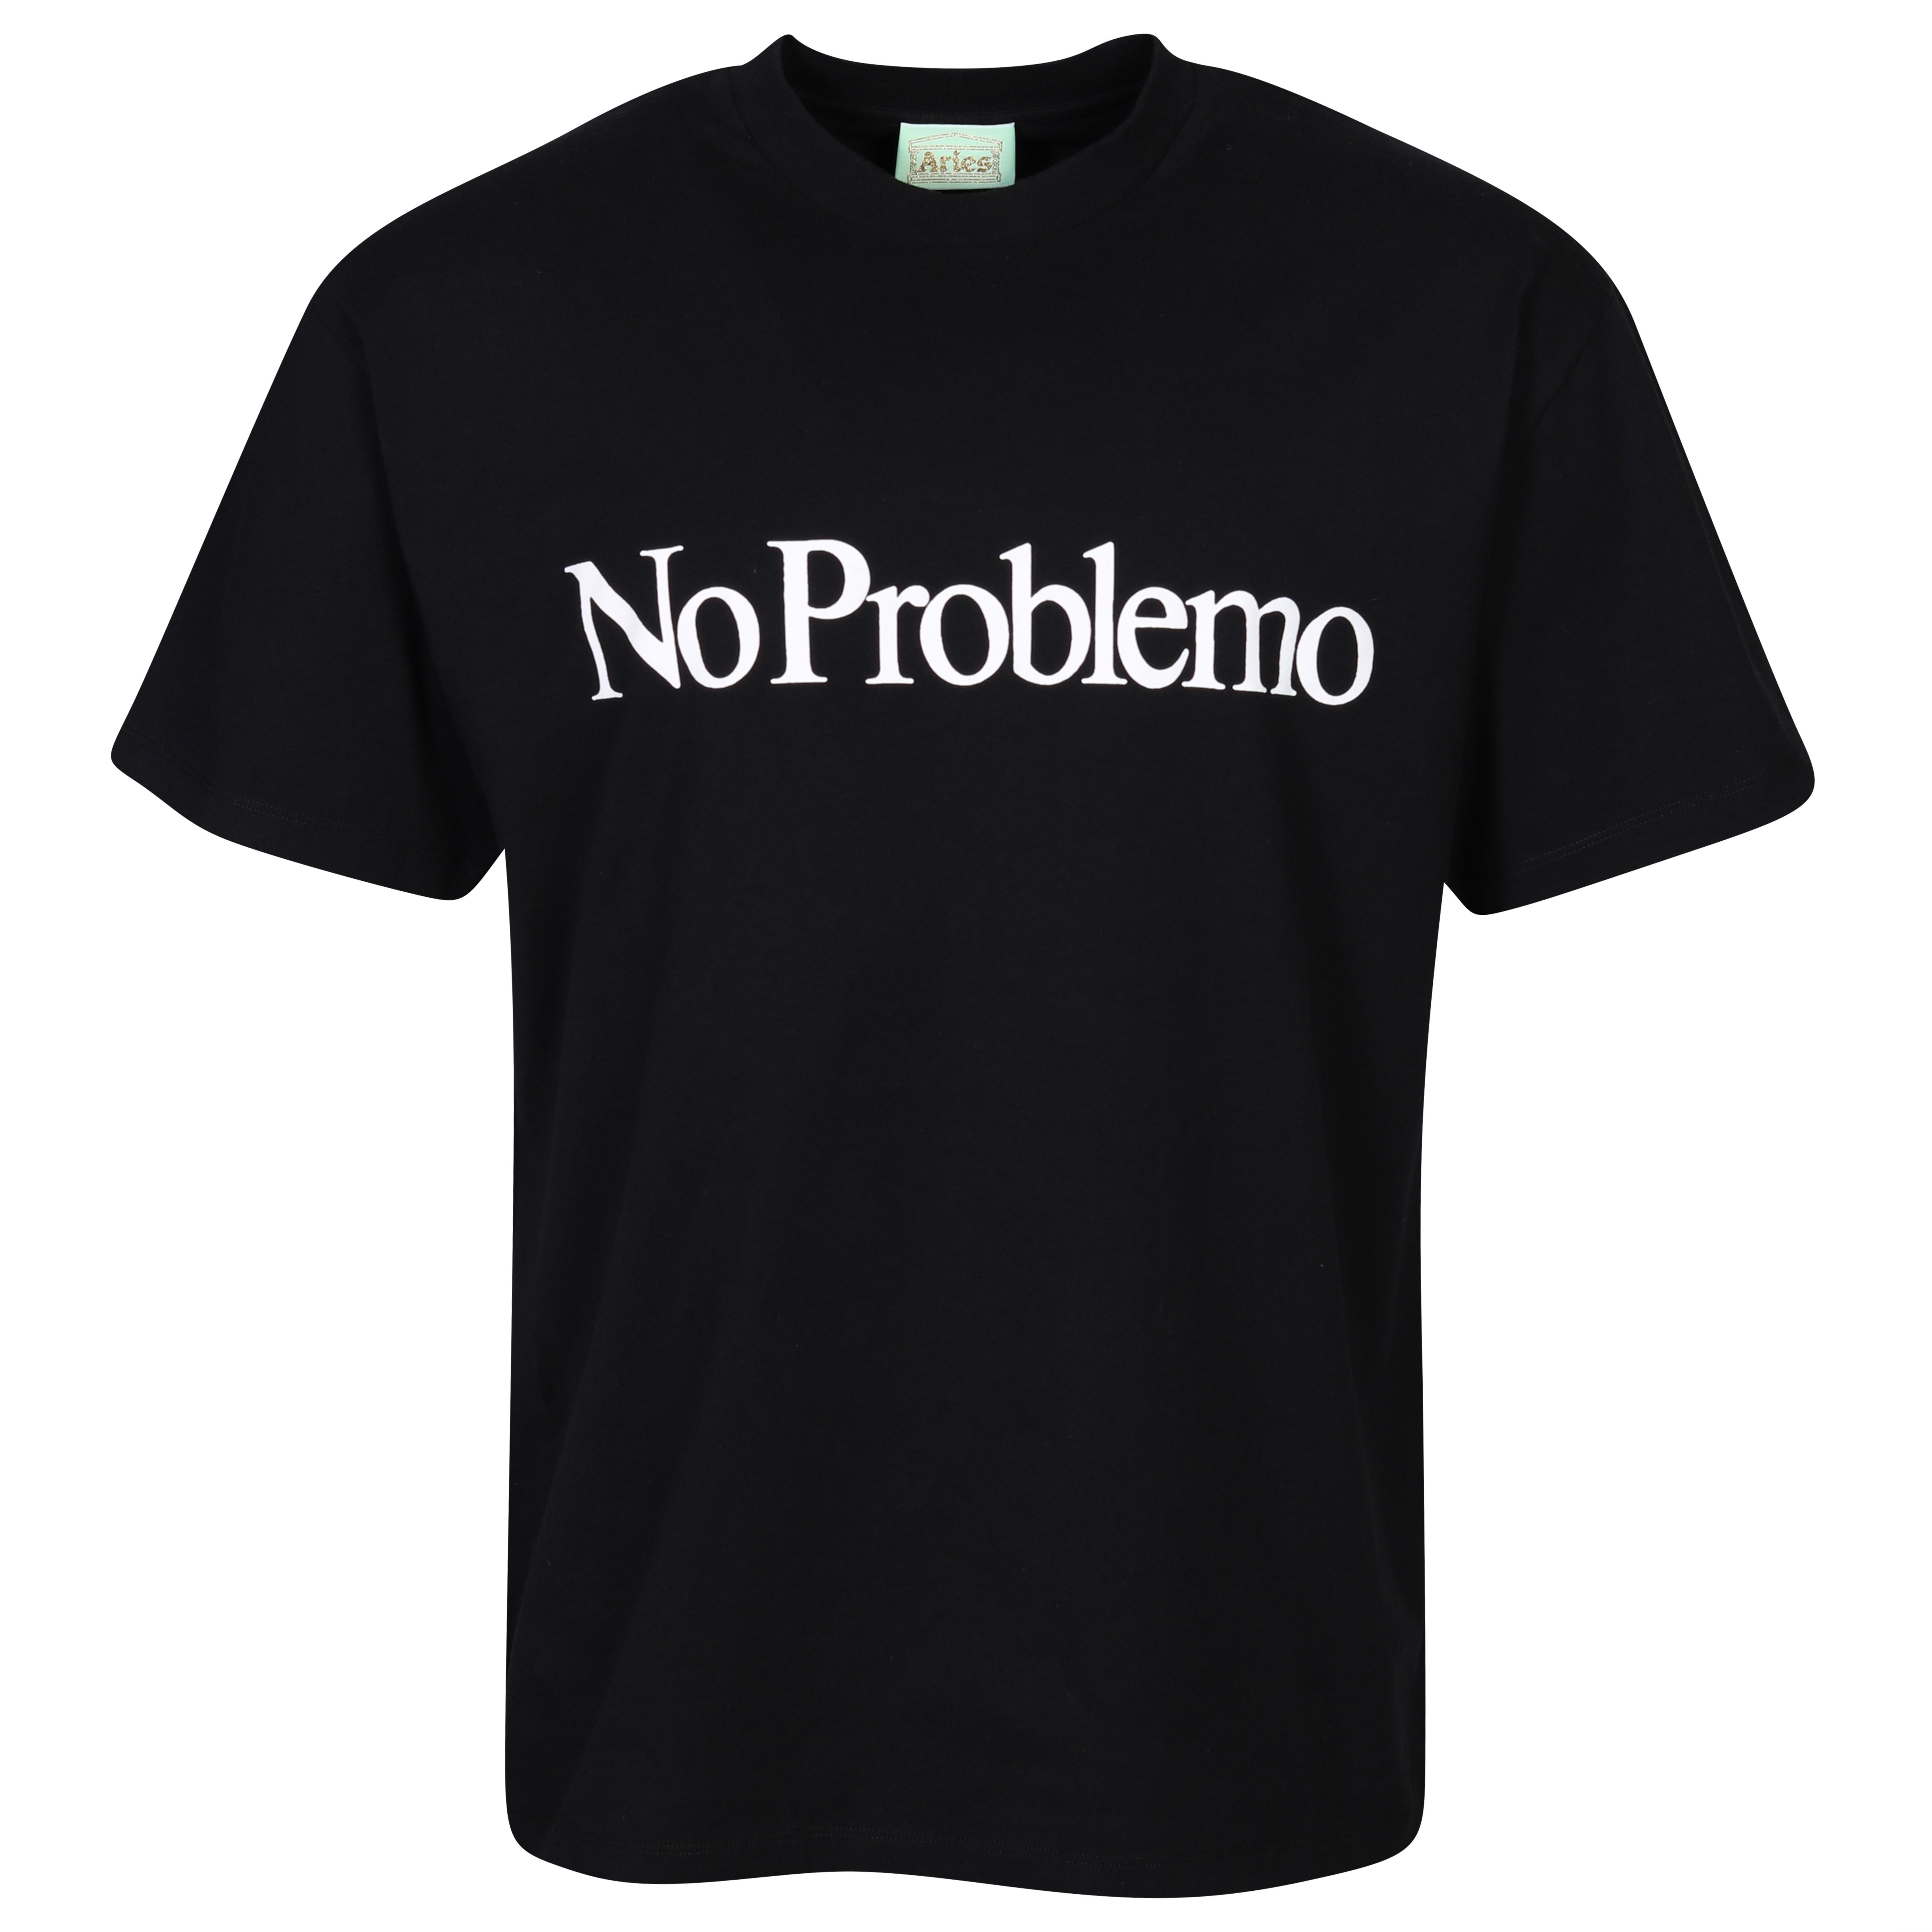 Unisex Aries Classic No Problemo T-Shirt in Black